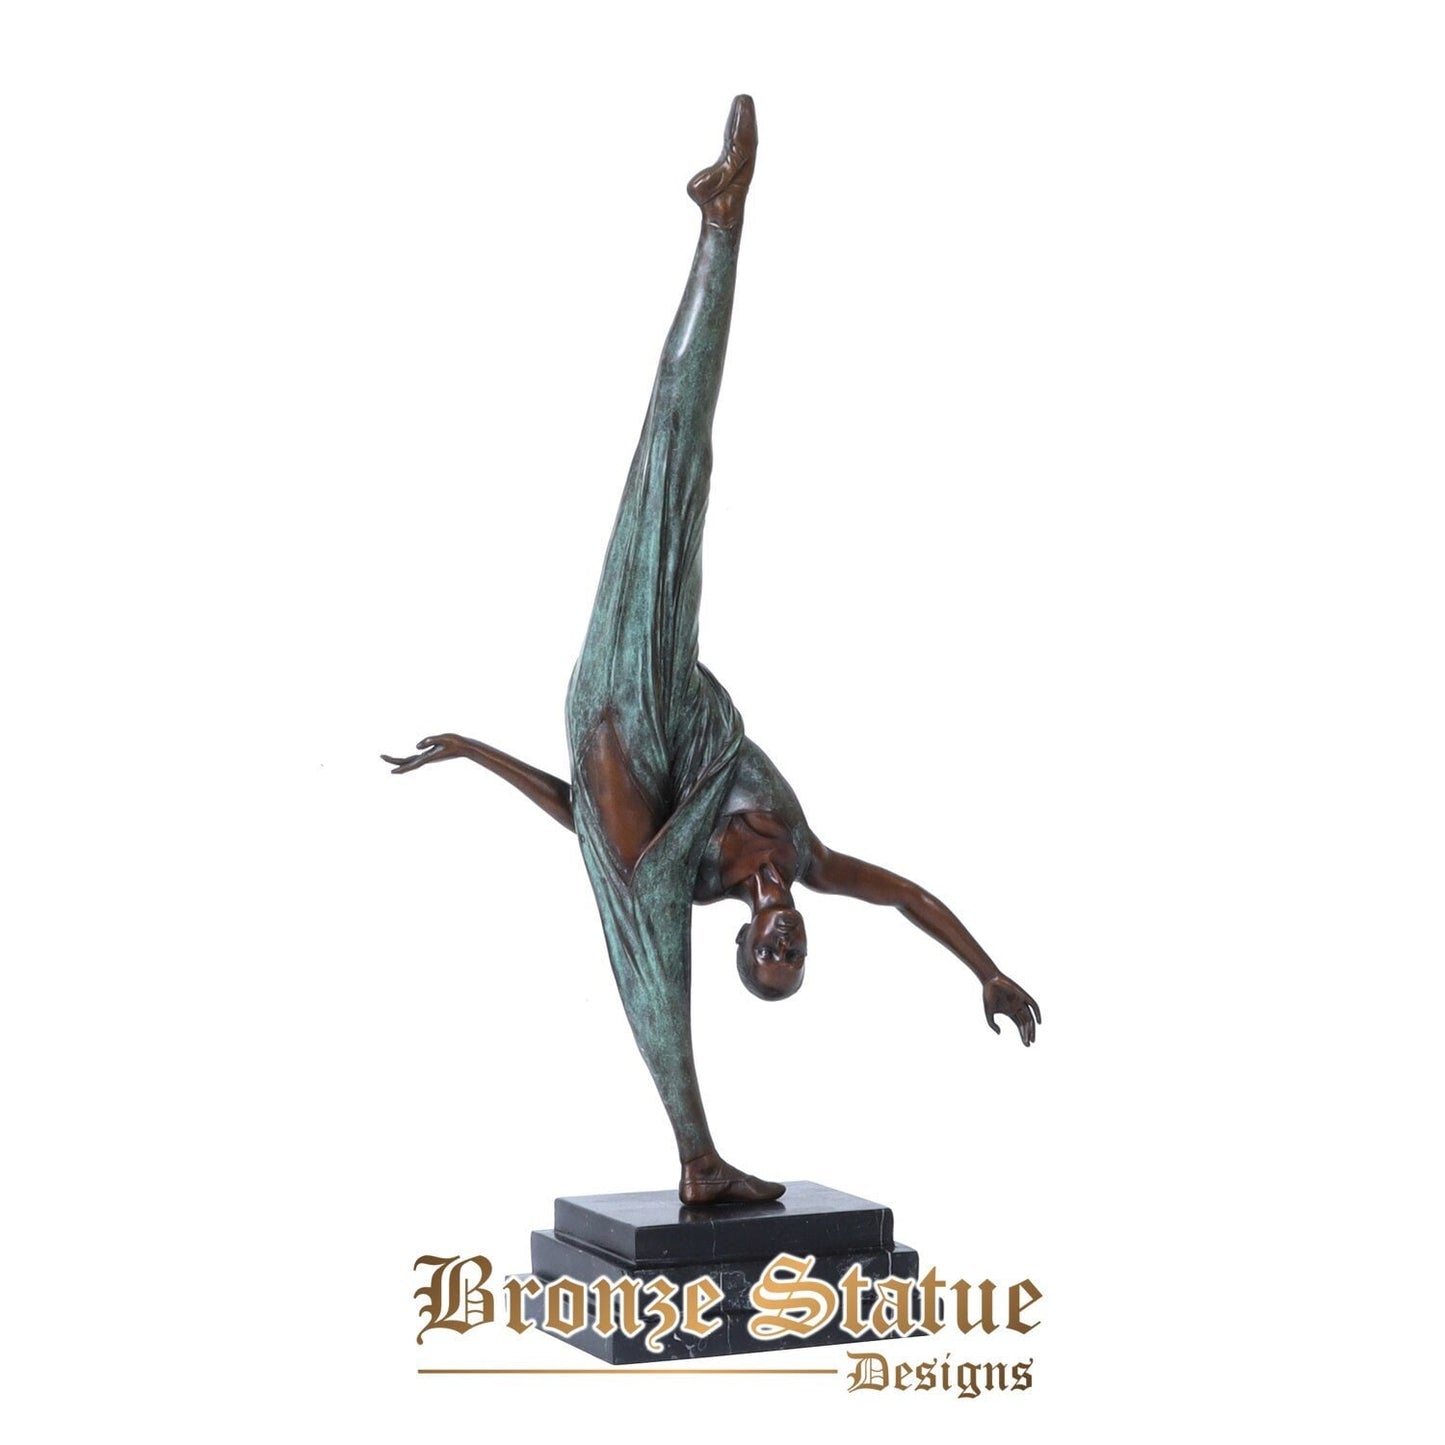 Modern western female ballerina dancer statue figurine bronze sculpture ballet girl art gift home decoration